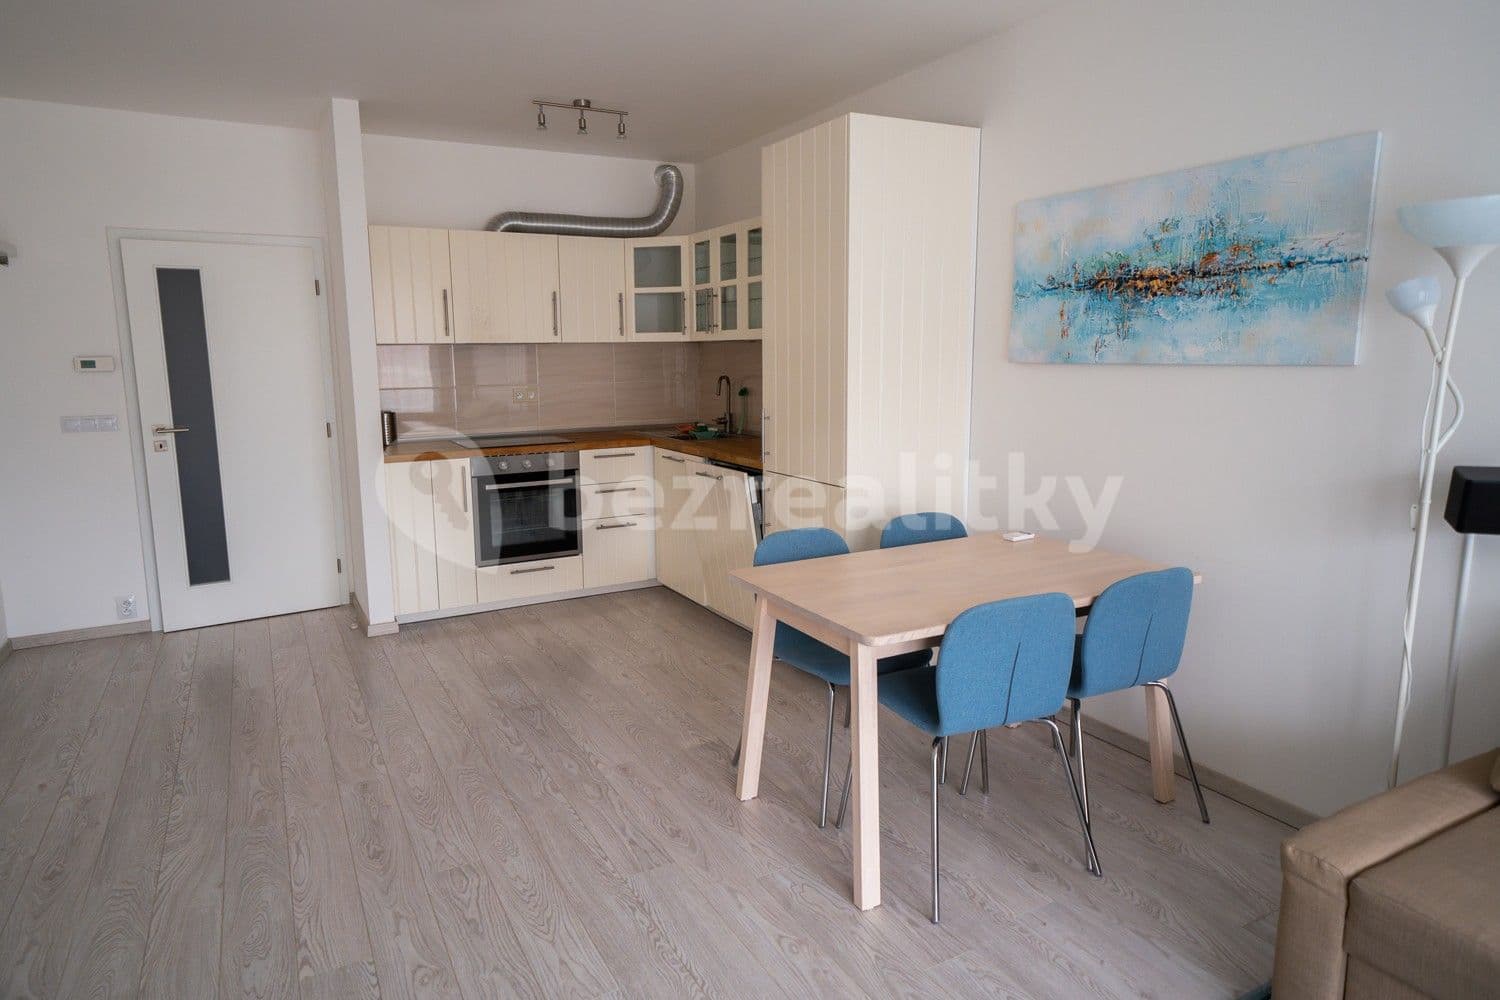 1 bedroom with open-plan kitchen flat to rent, 65 m², Sokolovská, Prague, Prague